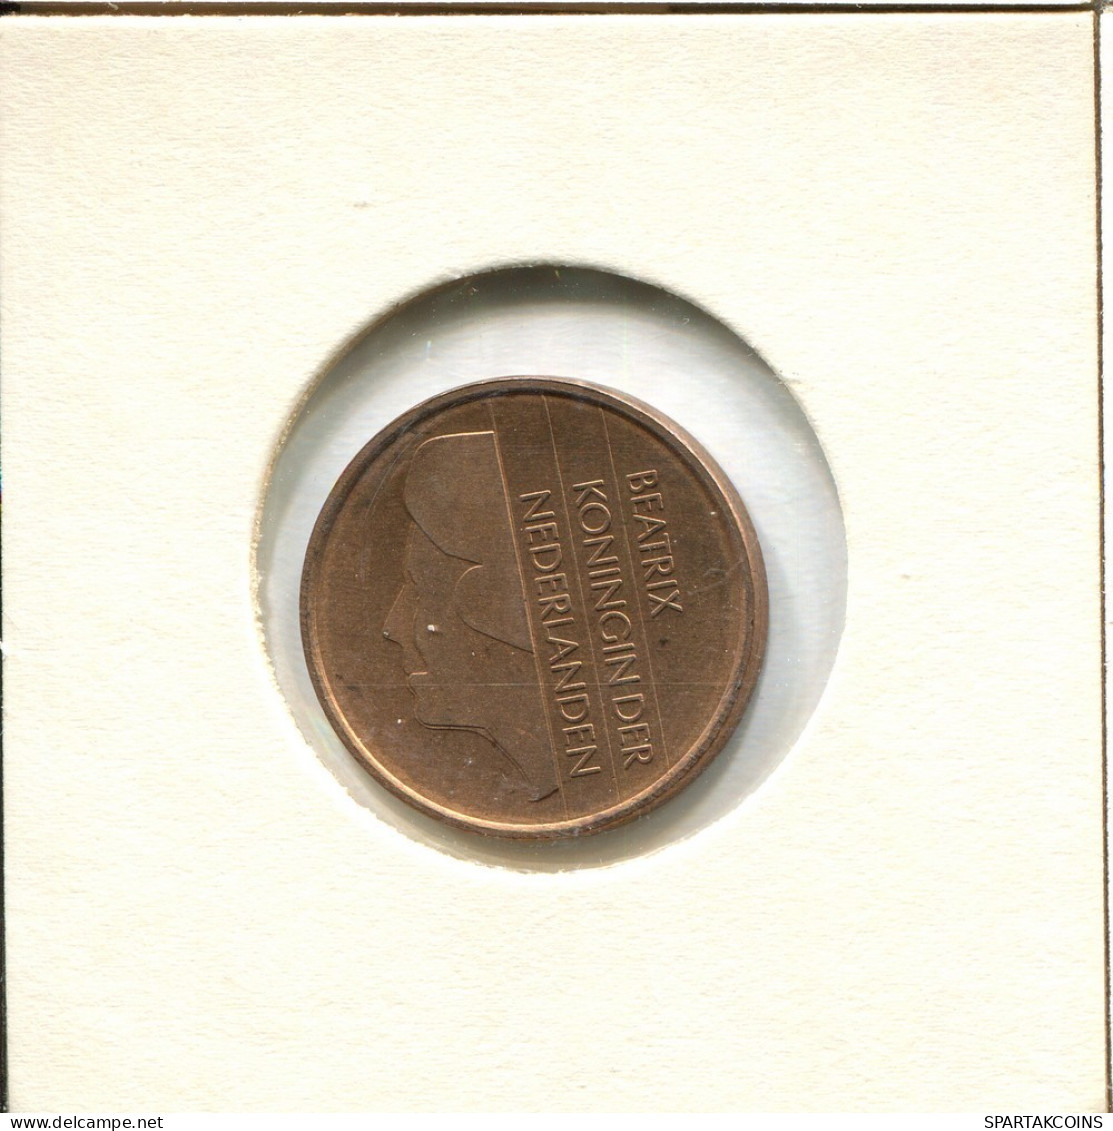 5 CENTS 1995 NETHERLANDS Coin #AU329.U.A - 1980-2001 : Beatrix